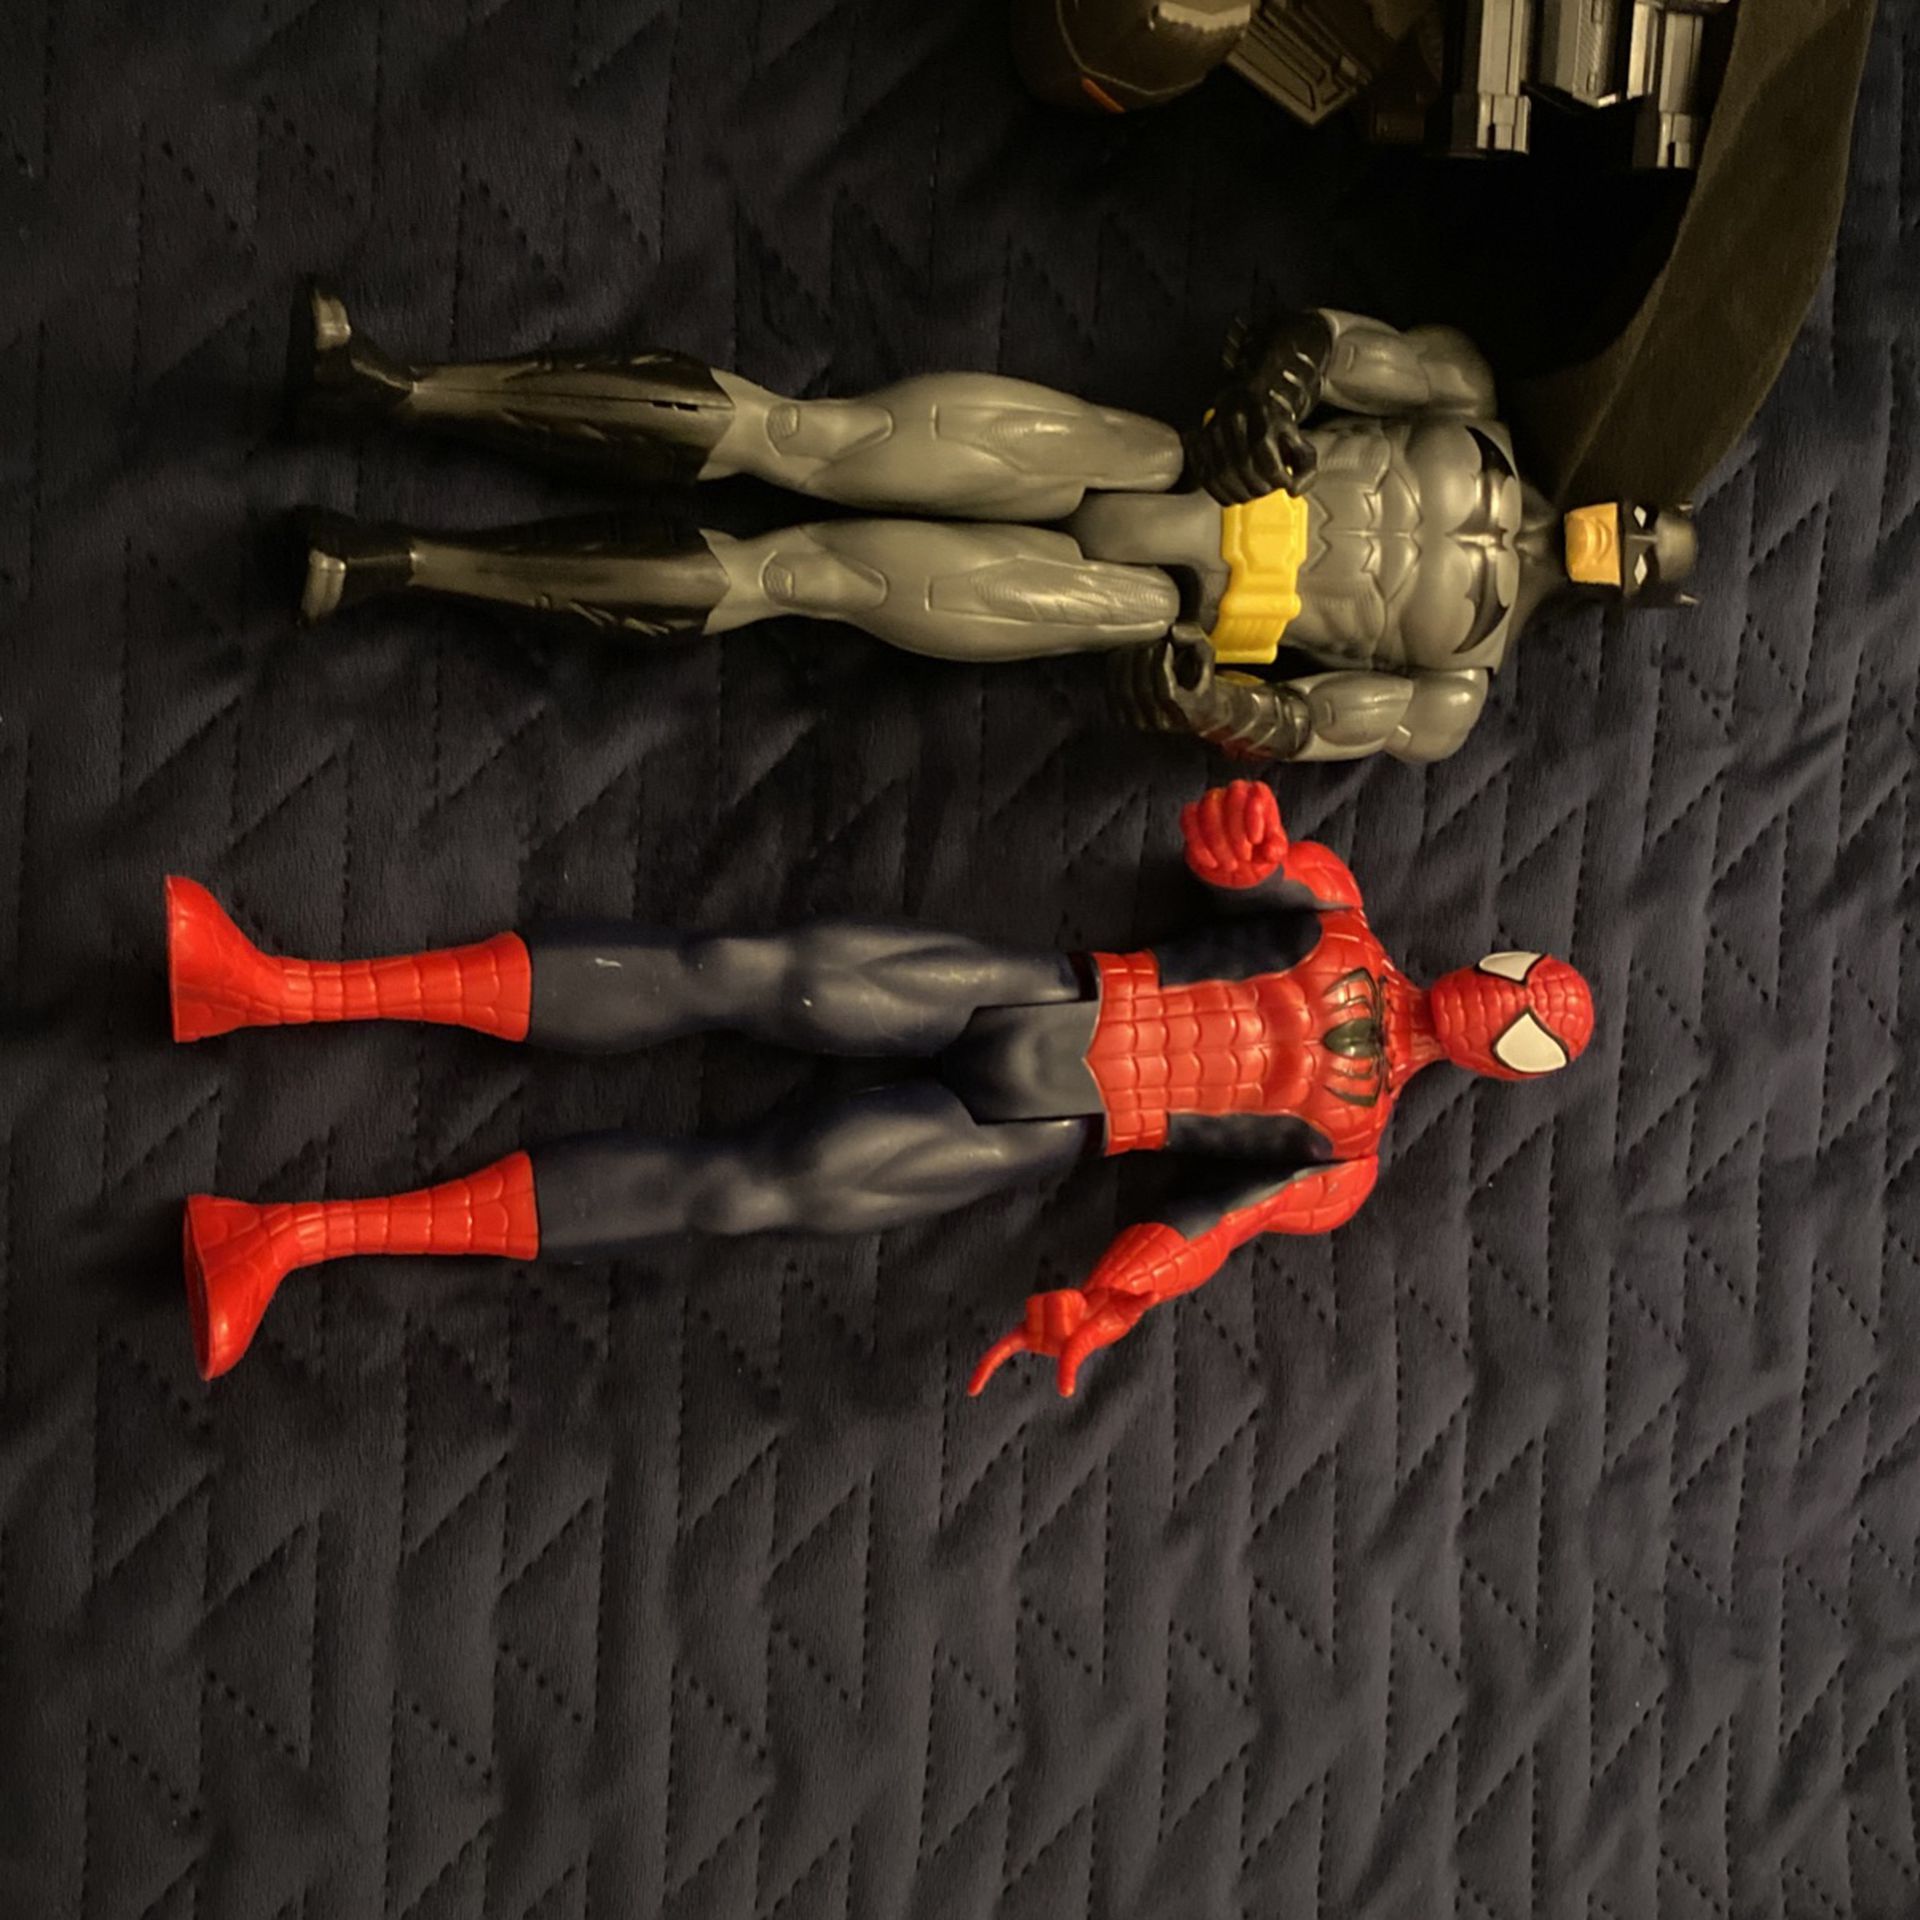 Batman and Spiderman action figures